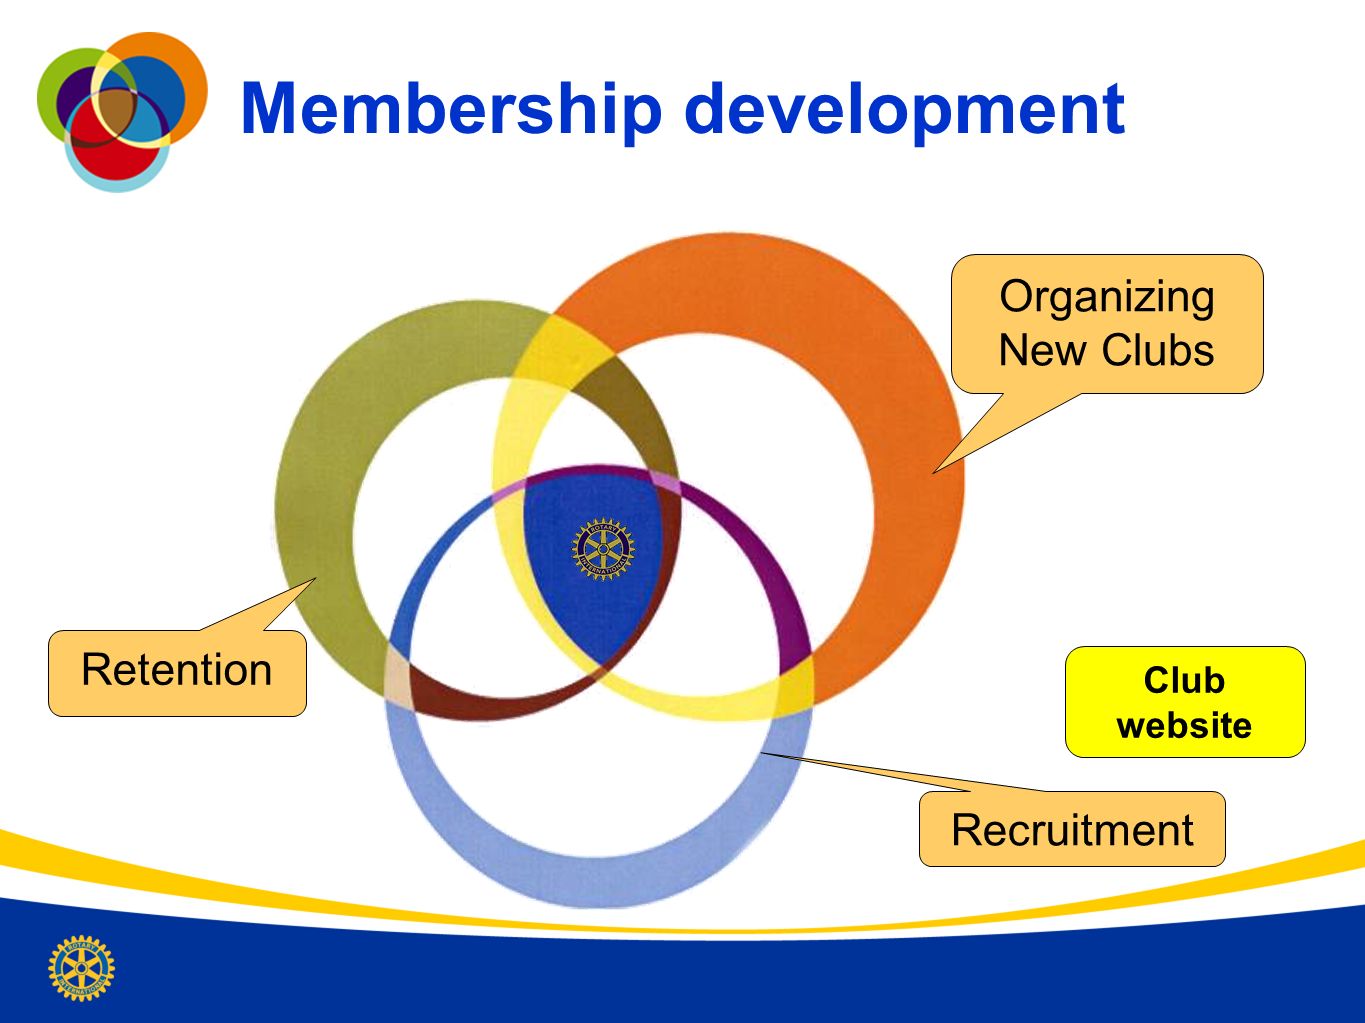 Membership development